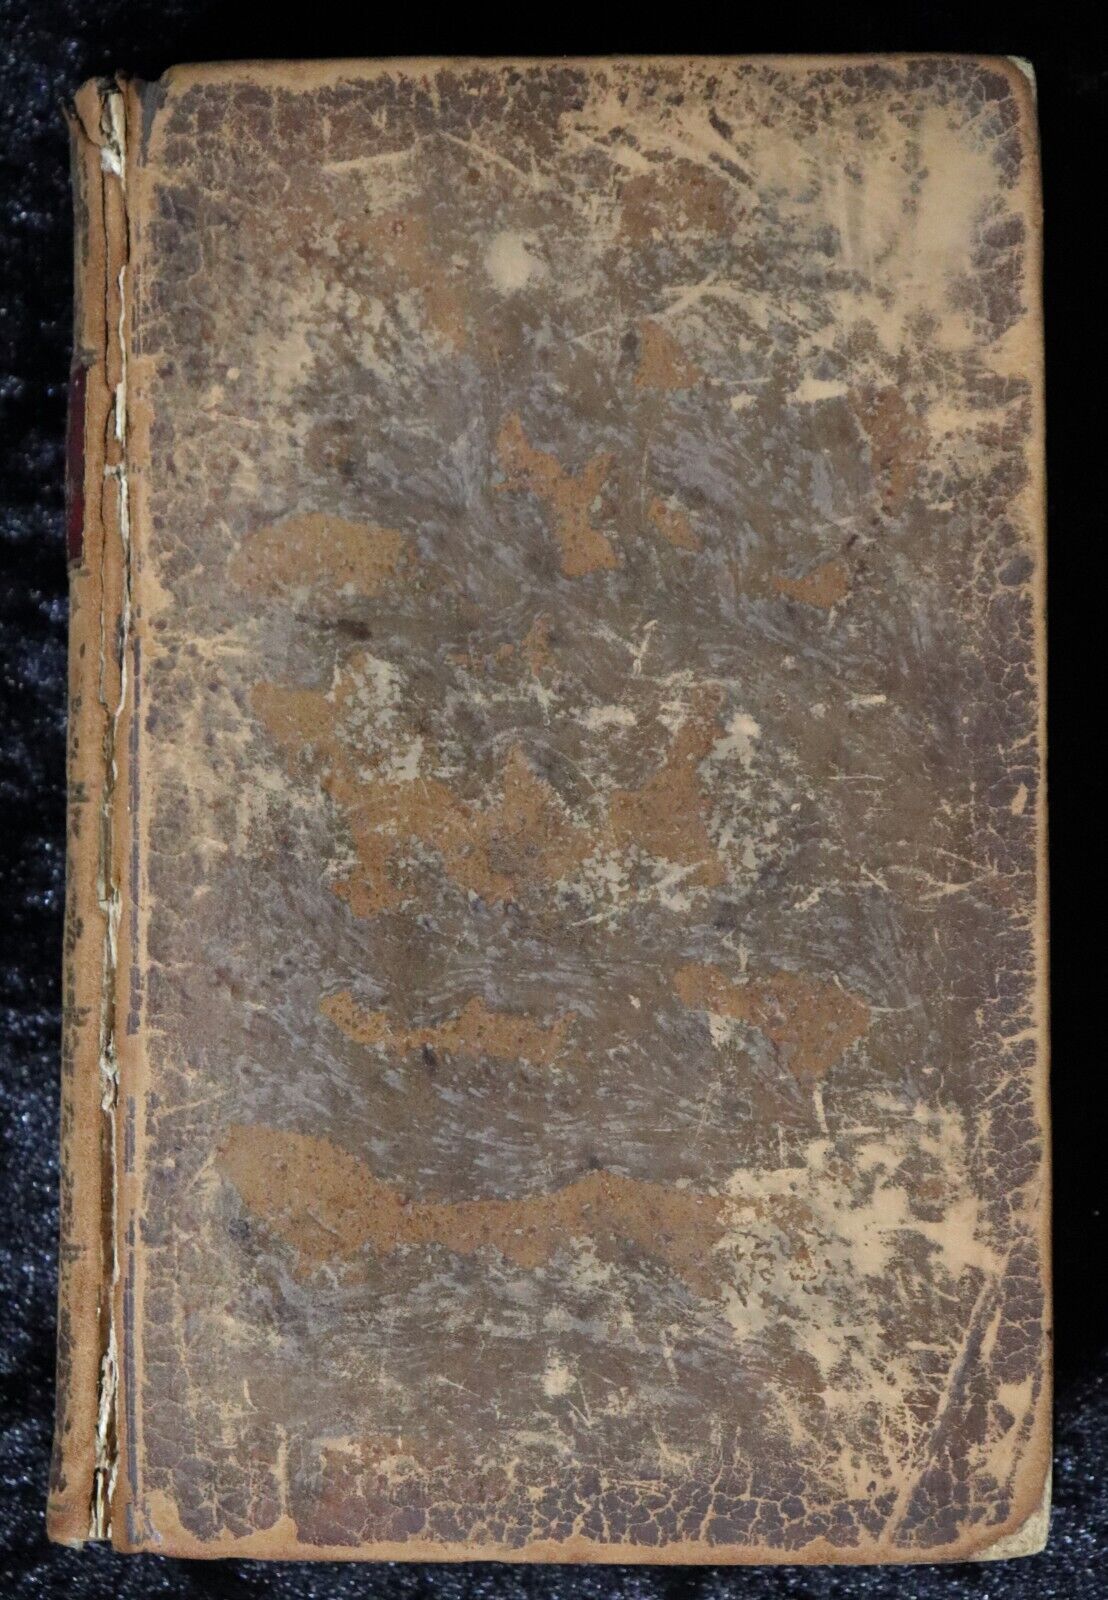 1769 Manuale Cantorum Sive Antiphonale Romanum Antiquarian Theology Book